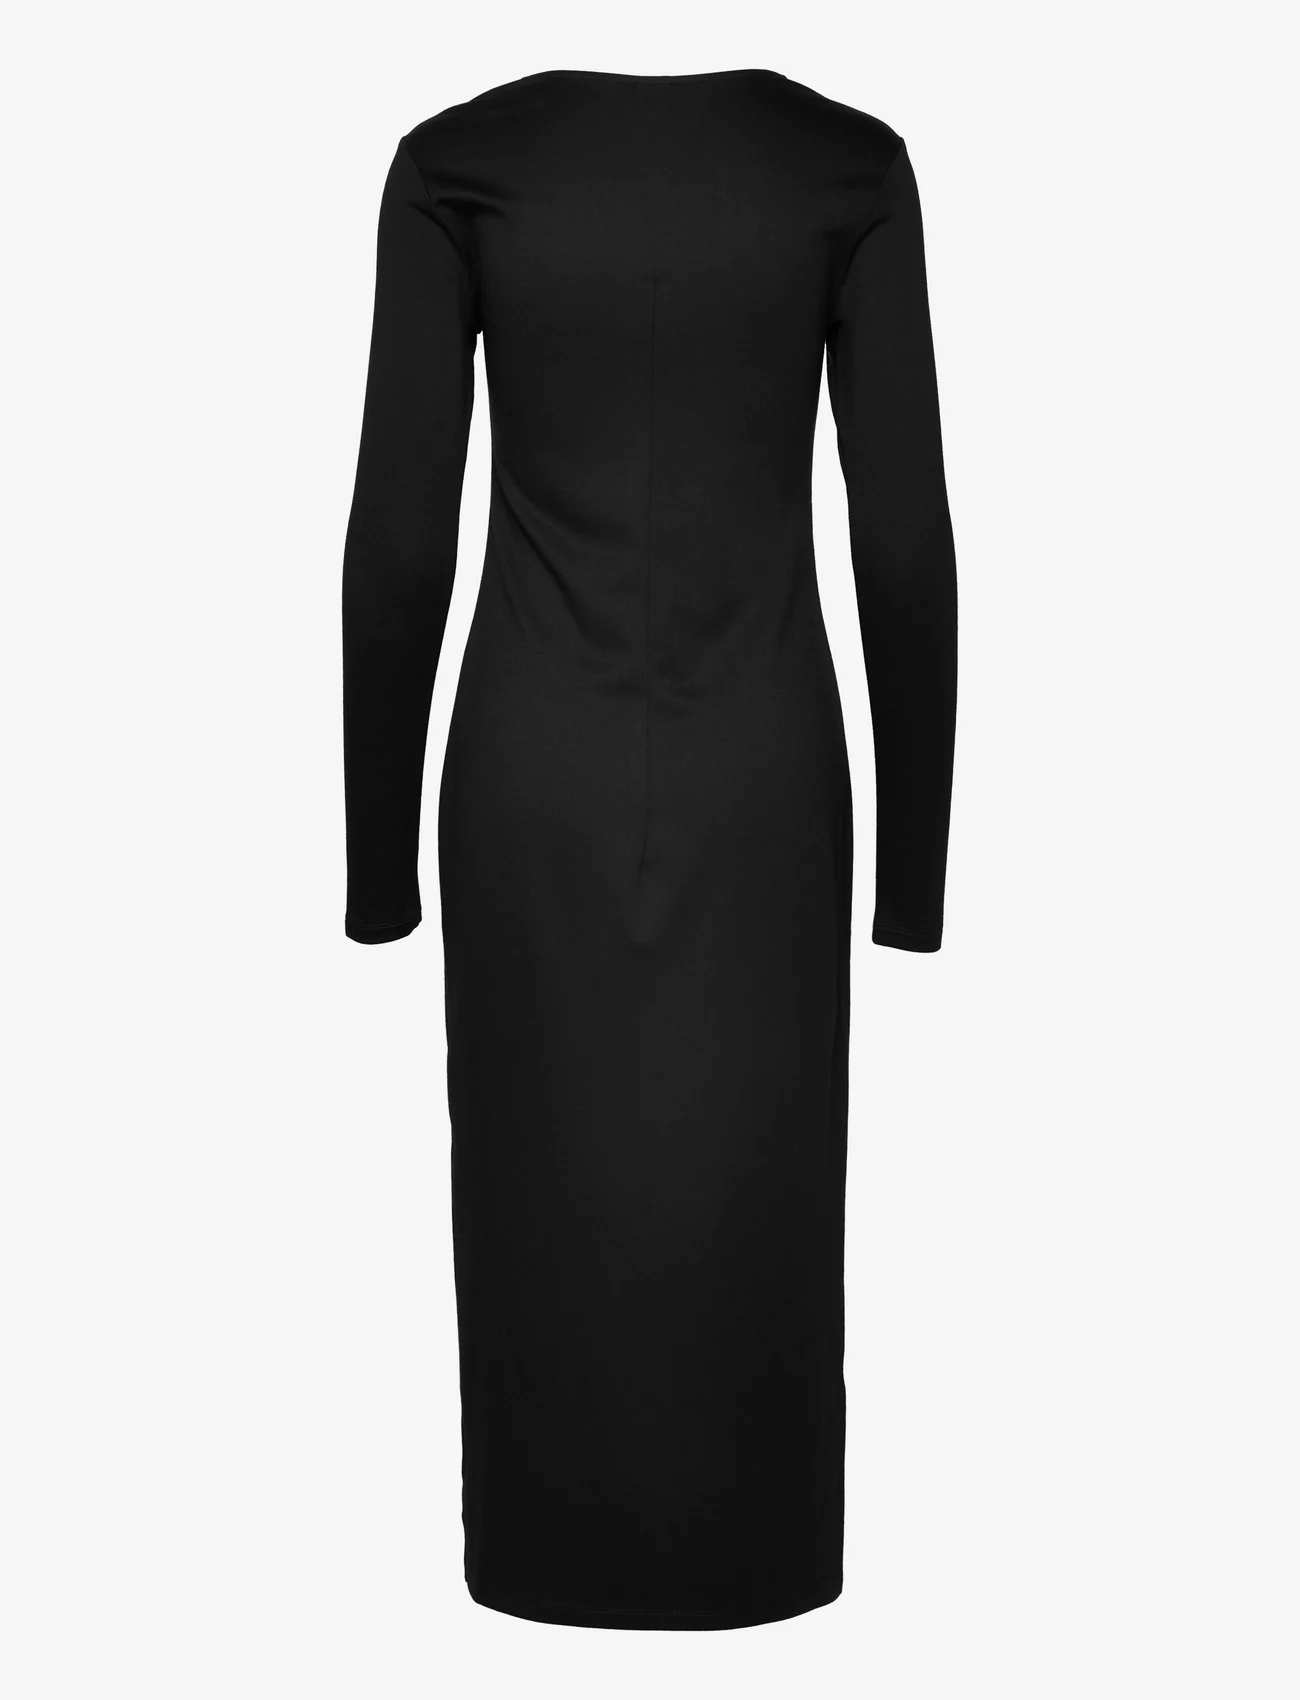 Twist & Tango - Amirah Dress - bodycon dresses - black - 1